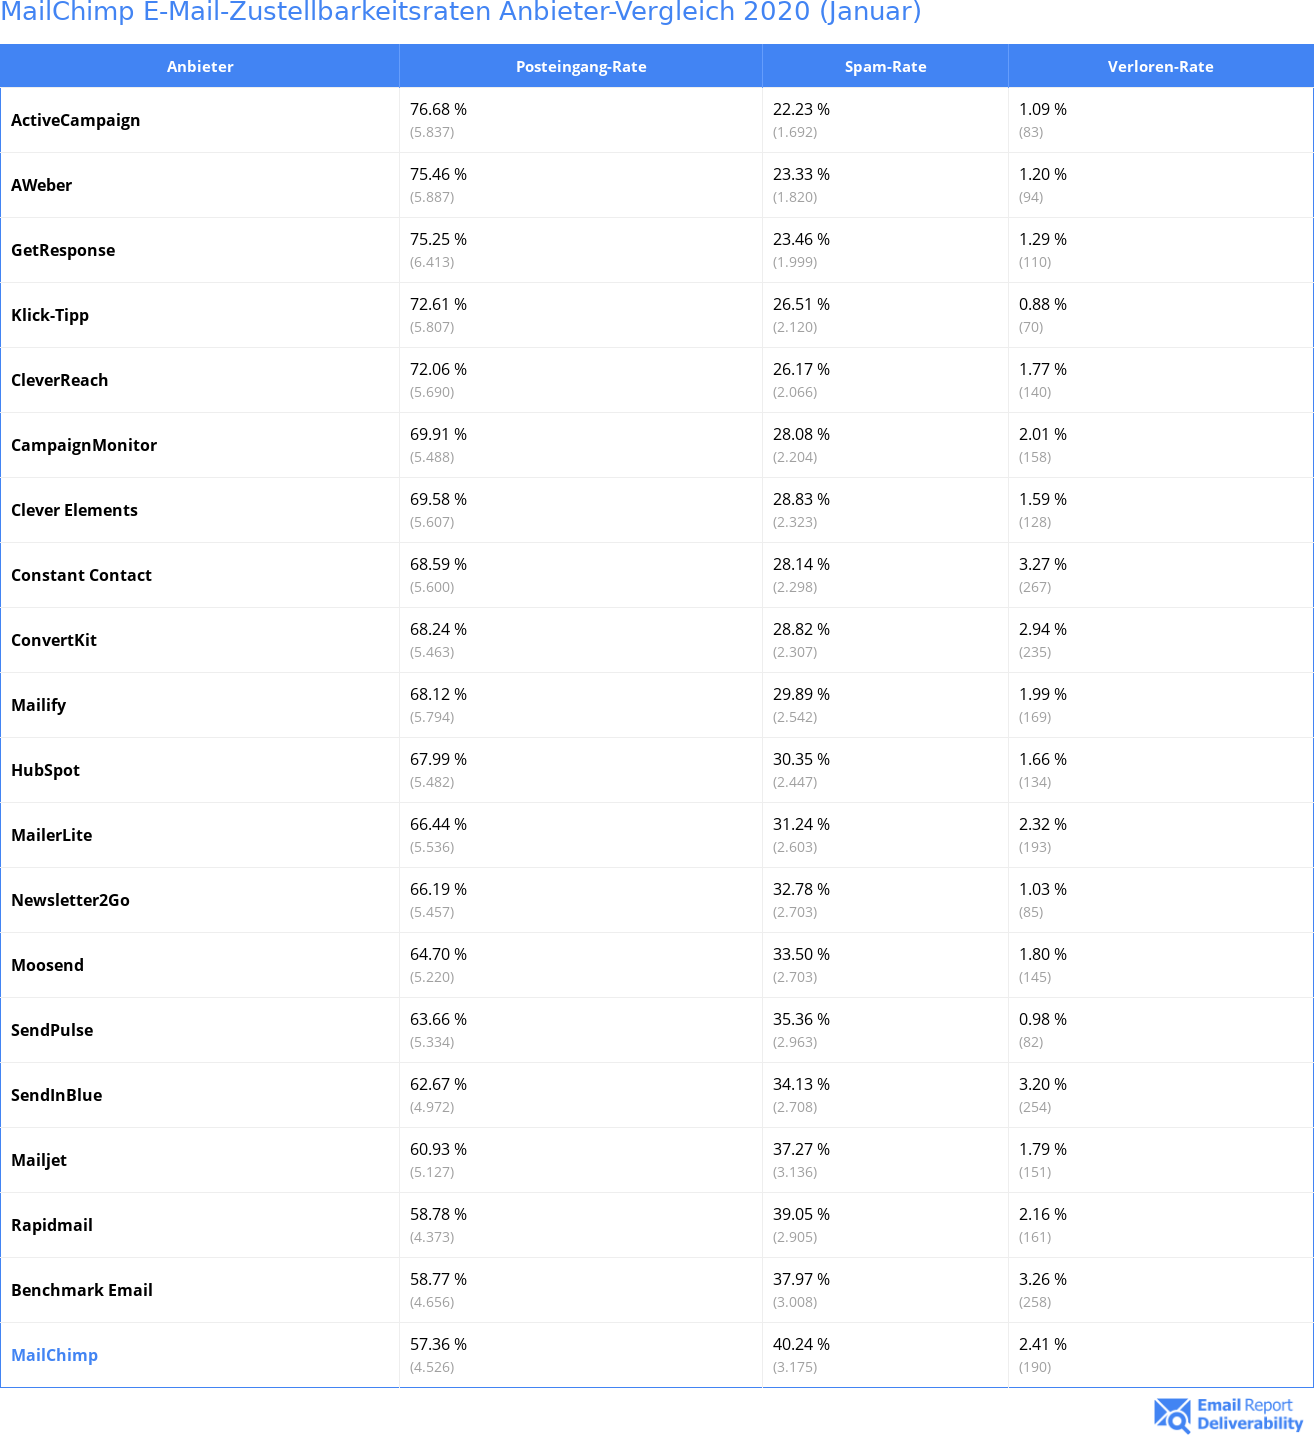 MailChimp E-Mail-Zustellbarkeitsraten Anbieter-Vergleich 2020 (Januar)